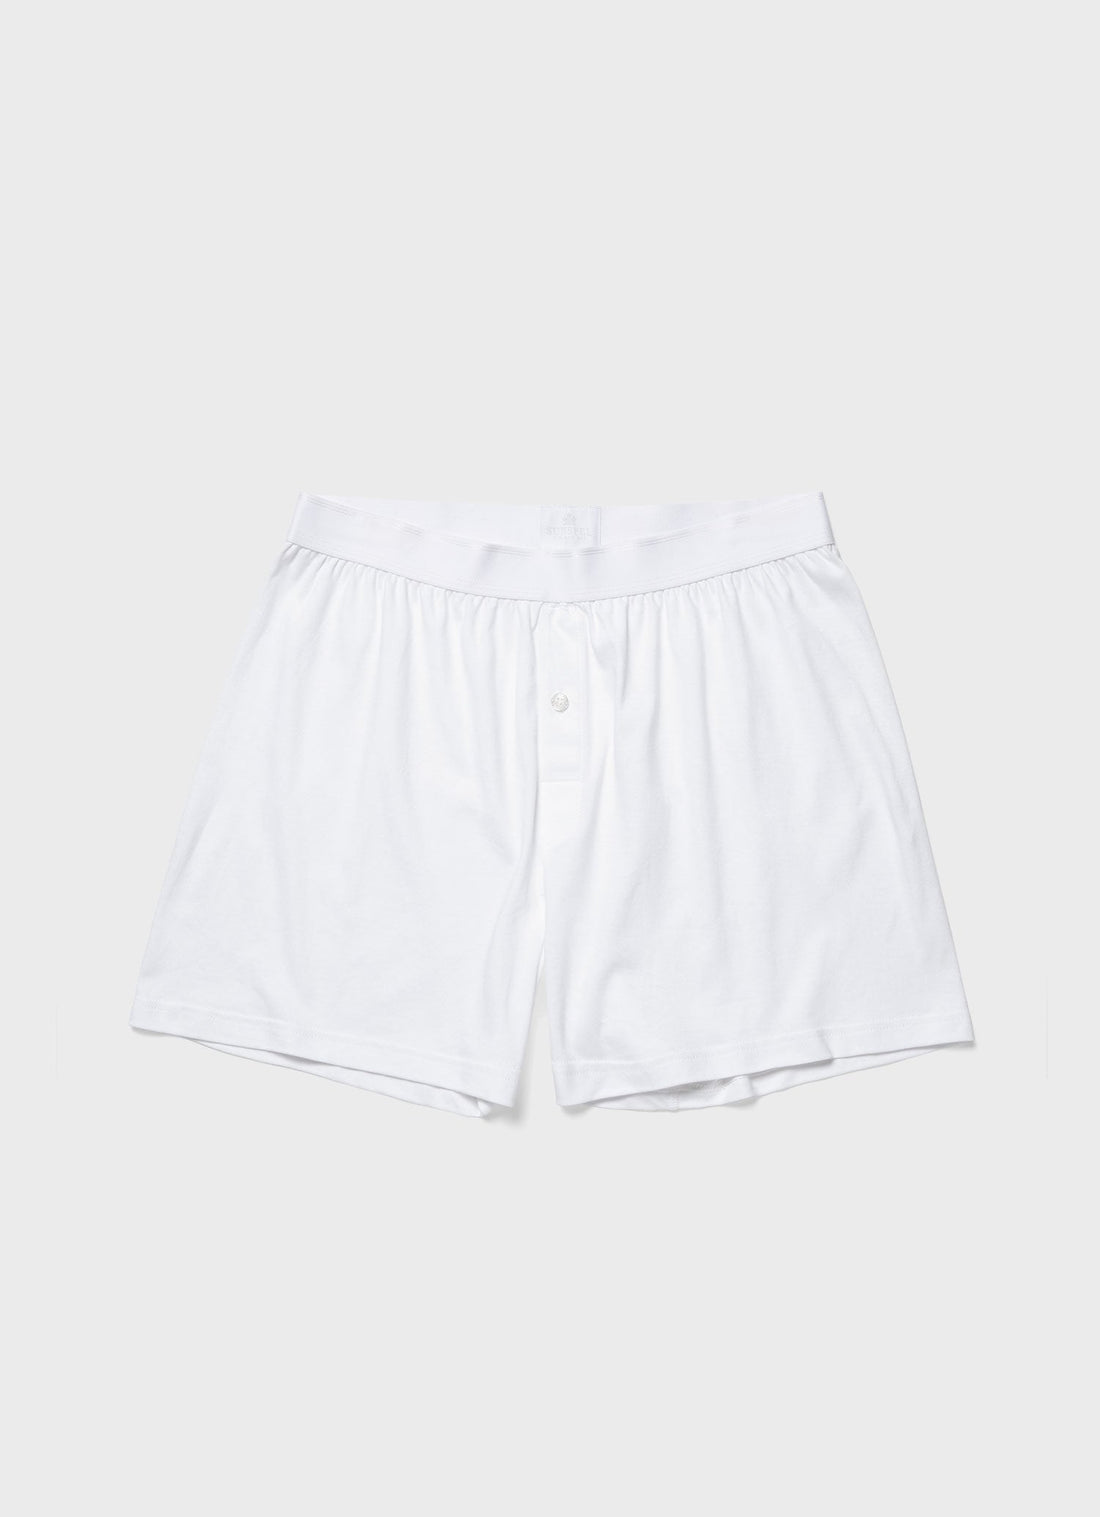 Men's Sea Island Cotton One-Button Shorts in White